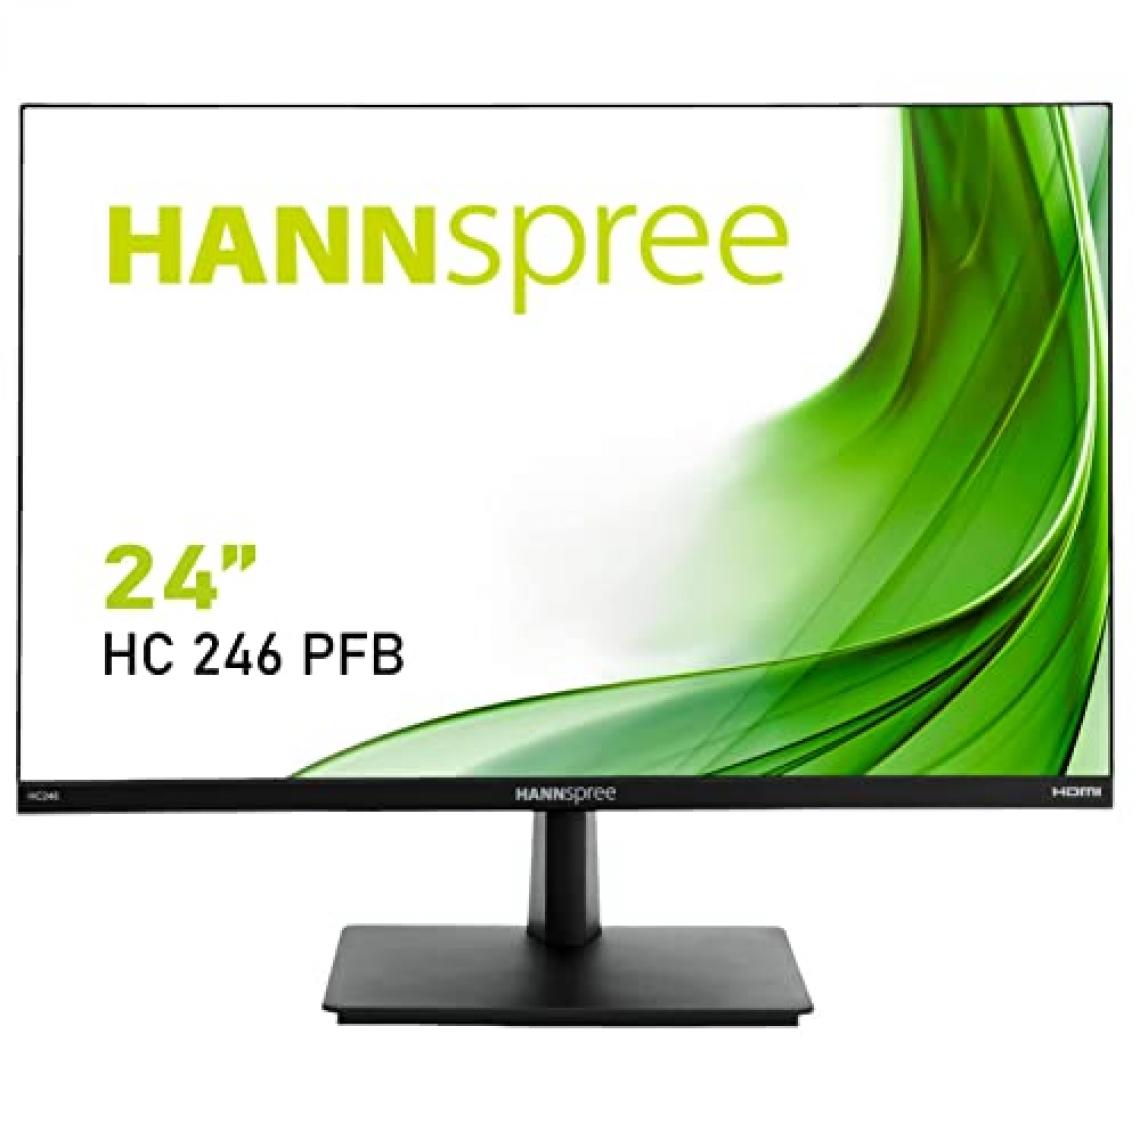 Hannspree - HC246PFB 24p WUXGA 250cd/m2 HC246PFB 24p WUXGA 250cd/m2 5ms HDMI DP VGA - Moniteur PC